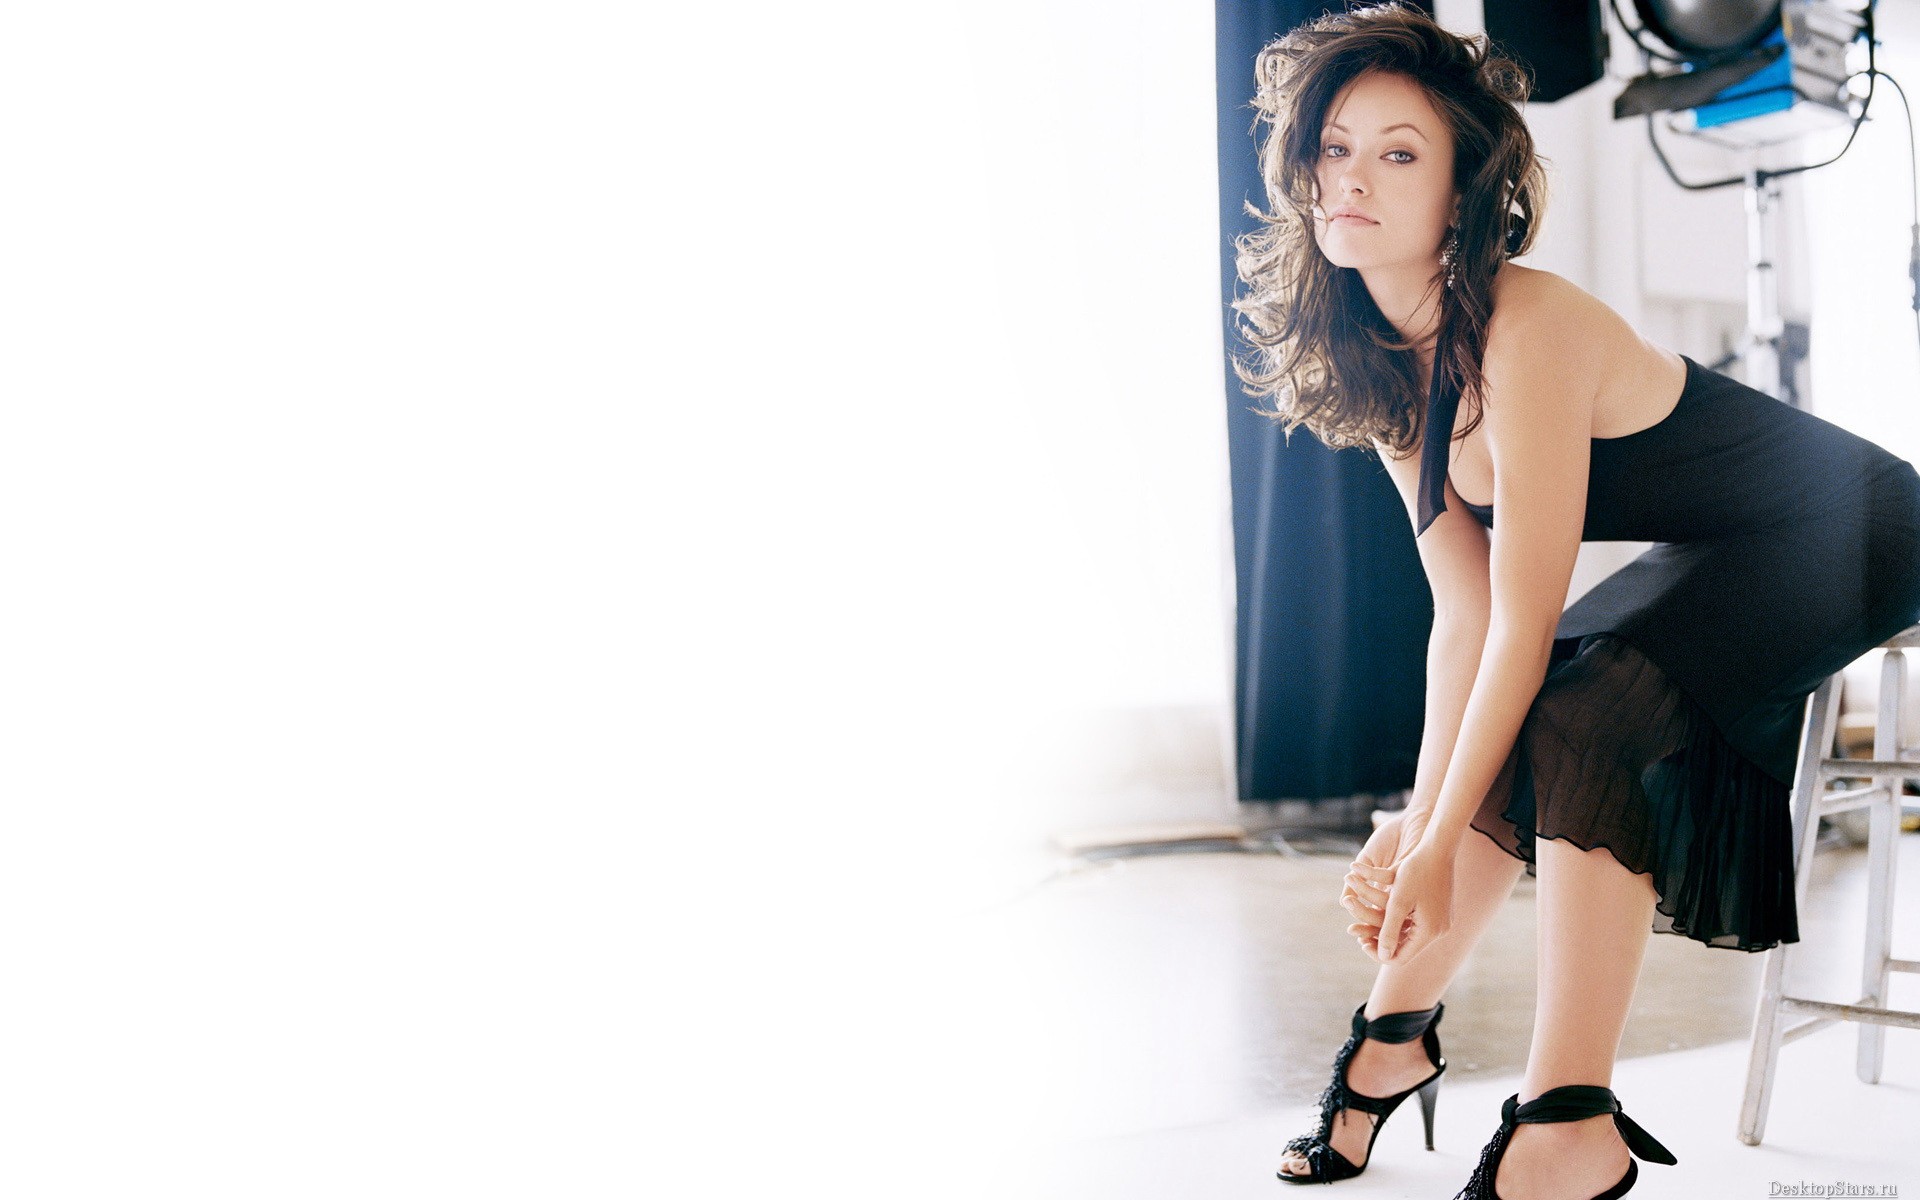 women, models, Olivia Wilde, high heels, black dress - desktop wallpaper